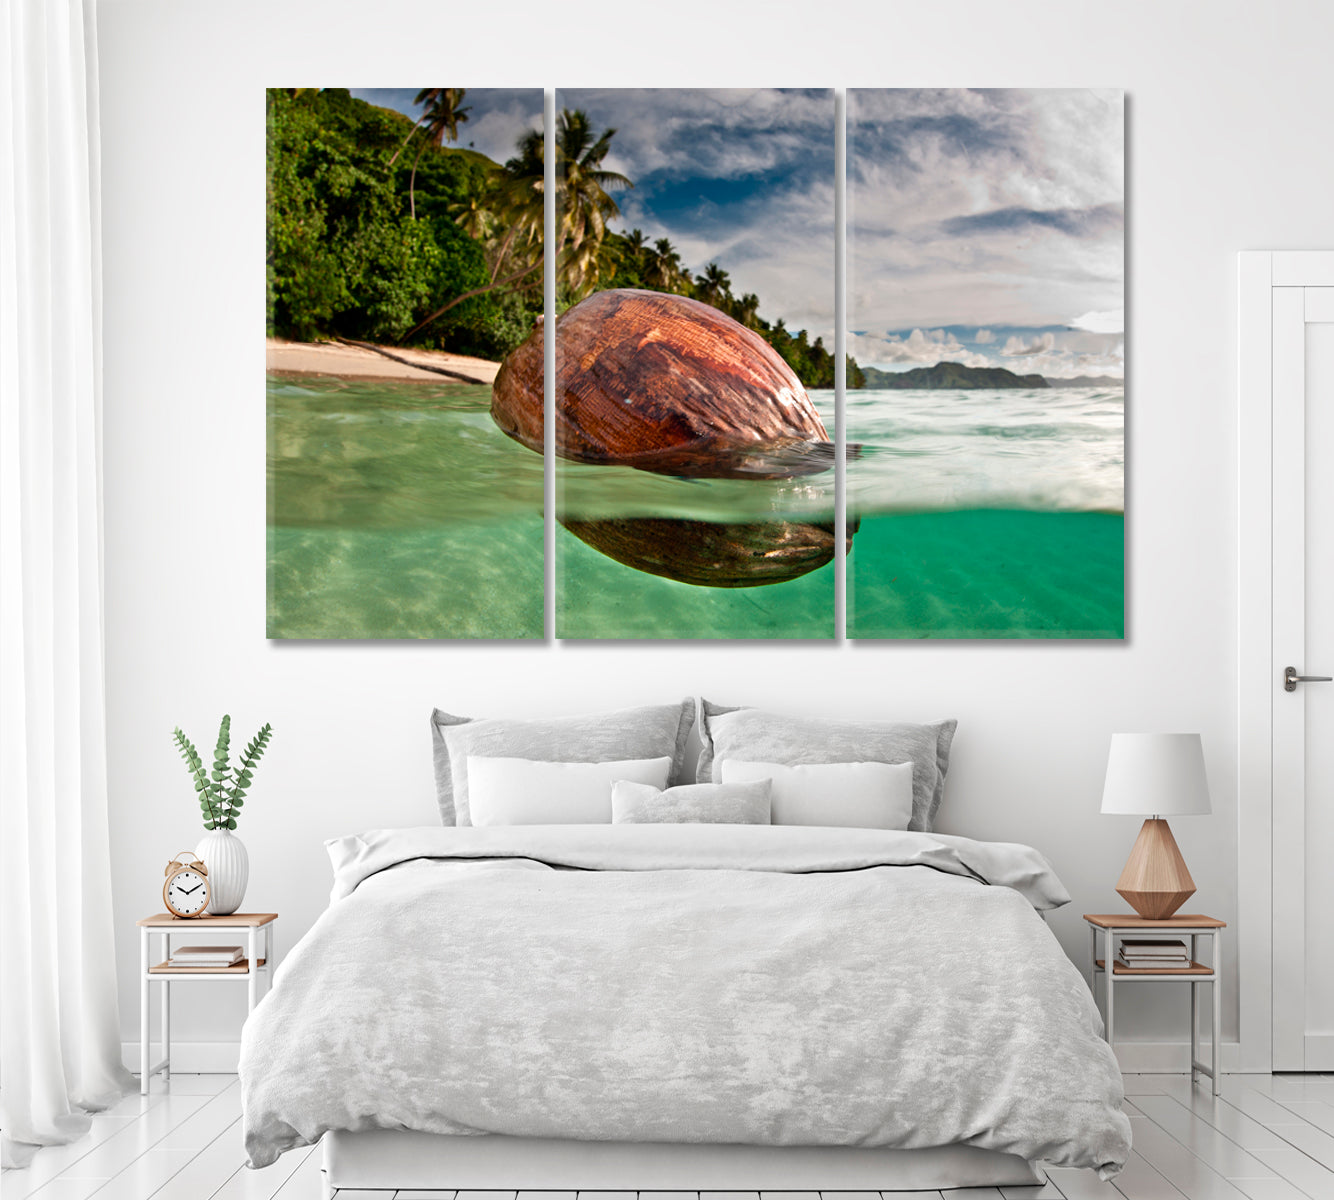 Coconut in Ocean near Beach Kadavu Island Fiji Canvas Print ArtLexy 3 Panels 36"x24" inches 